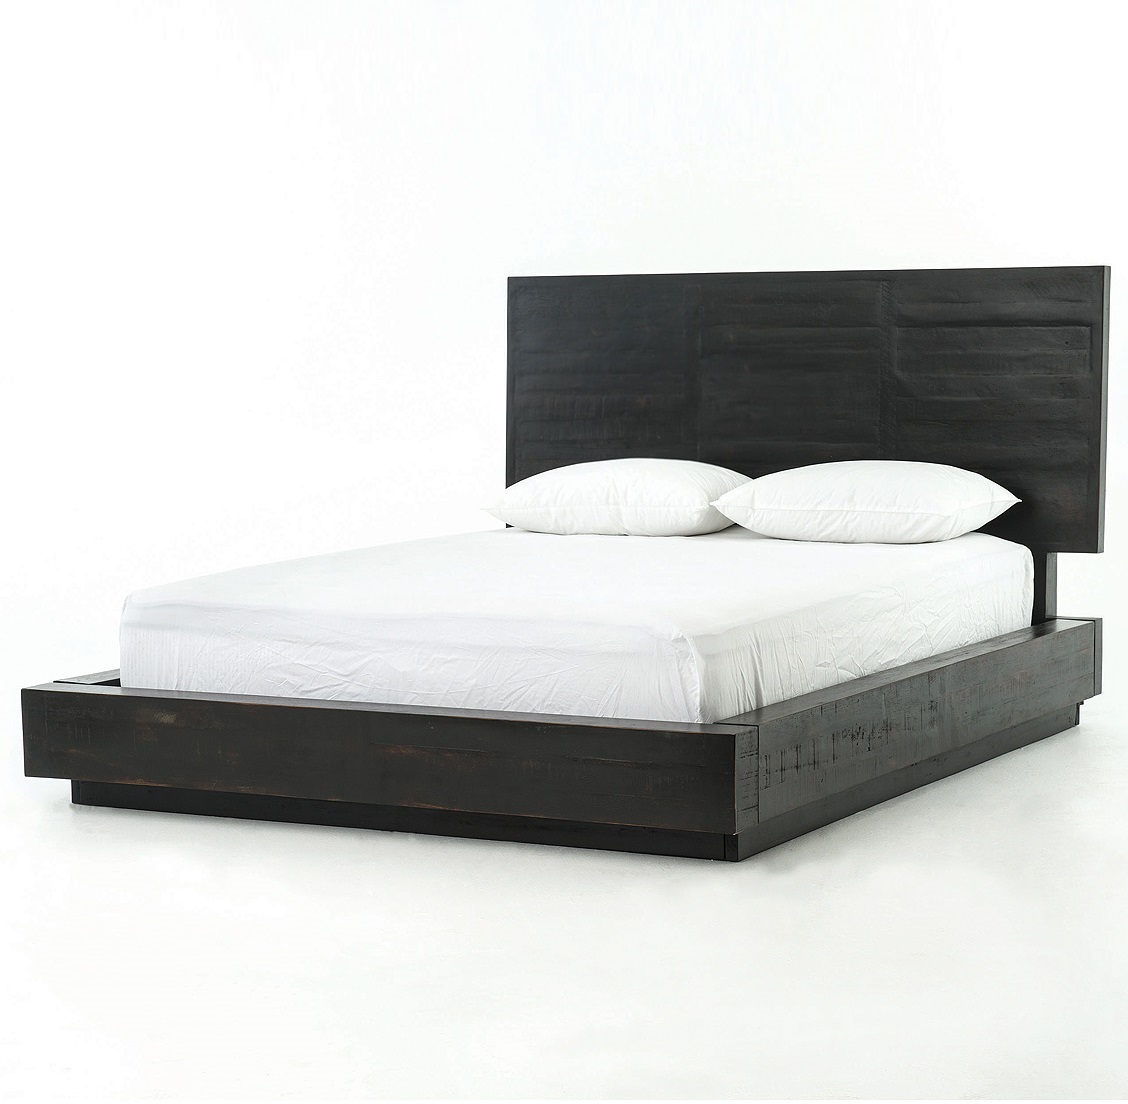 Cute Modern Black Wood Queen Size Platform Bed Frame ... queen size platform bed frame